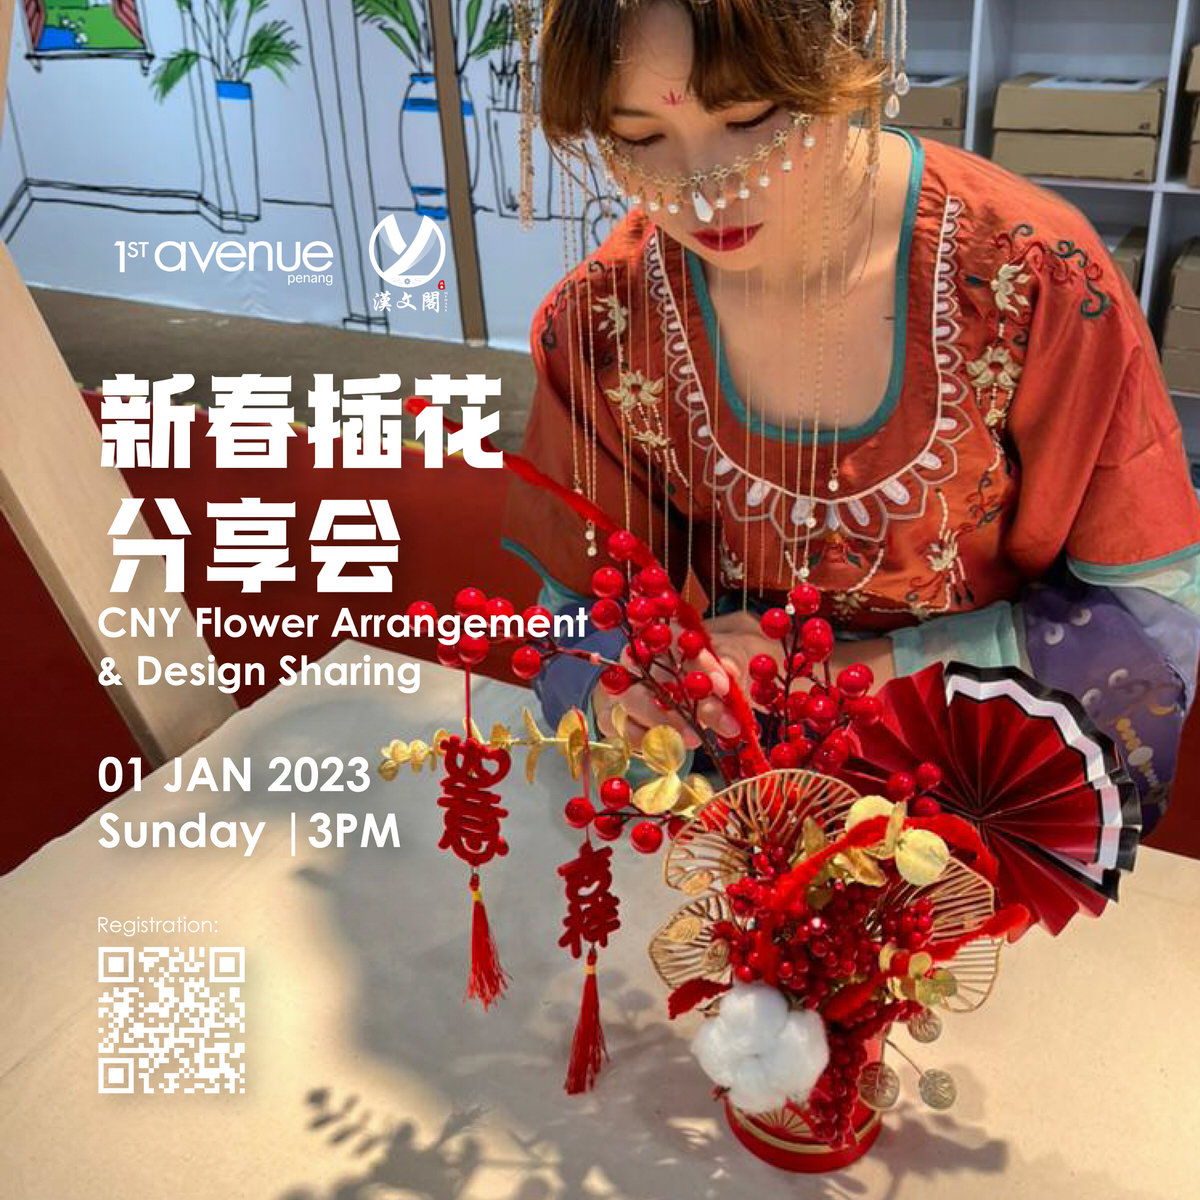 CNY Flower Arrangement & Design Sharing